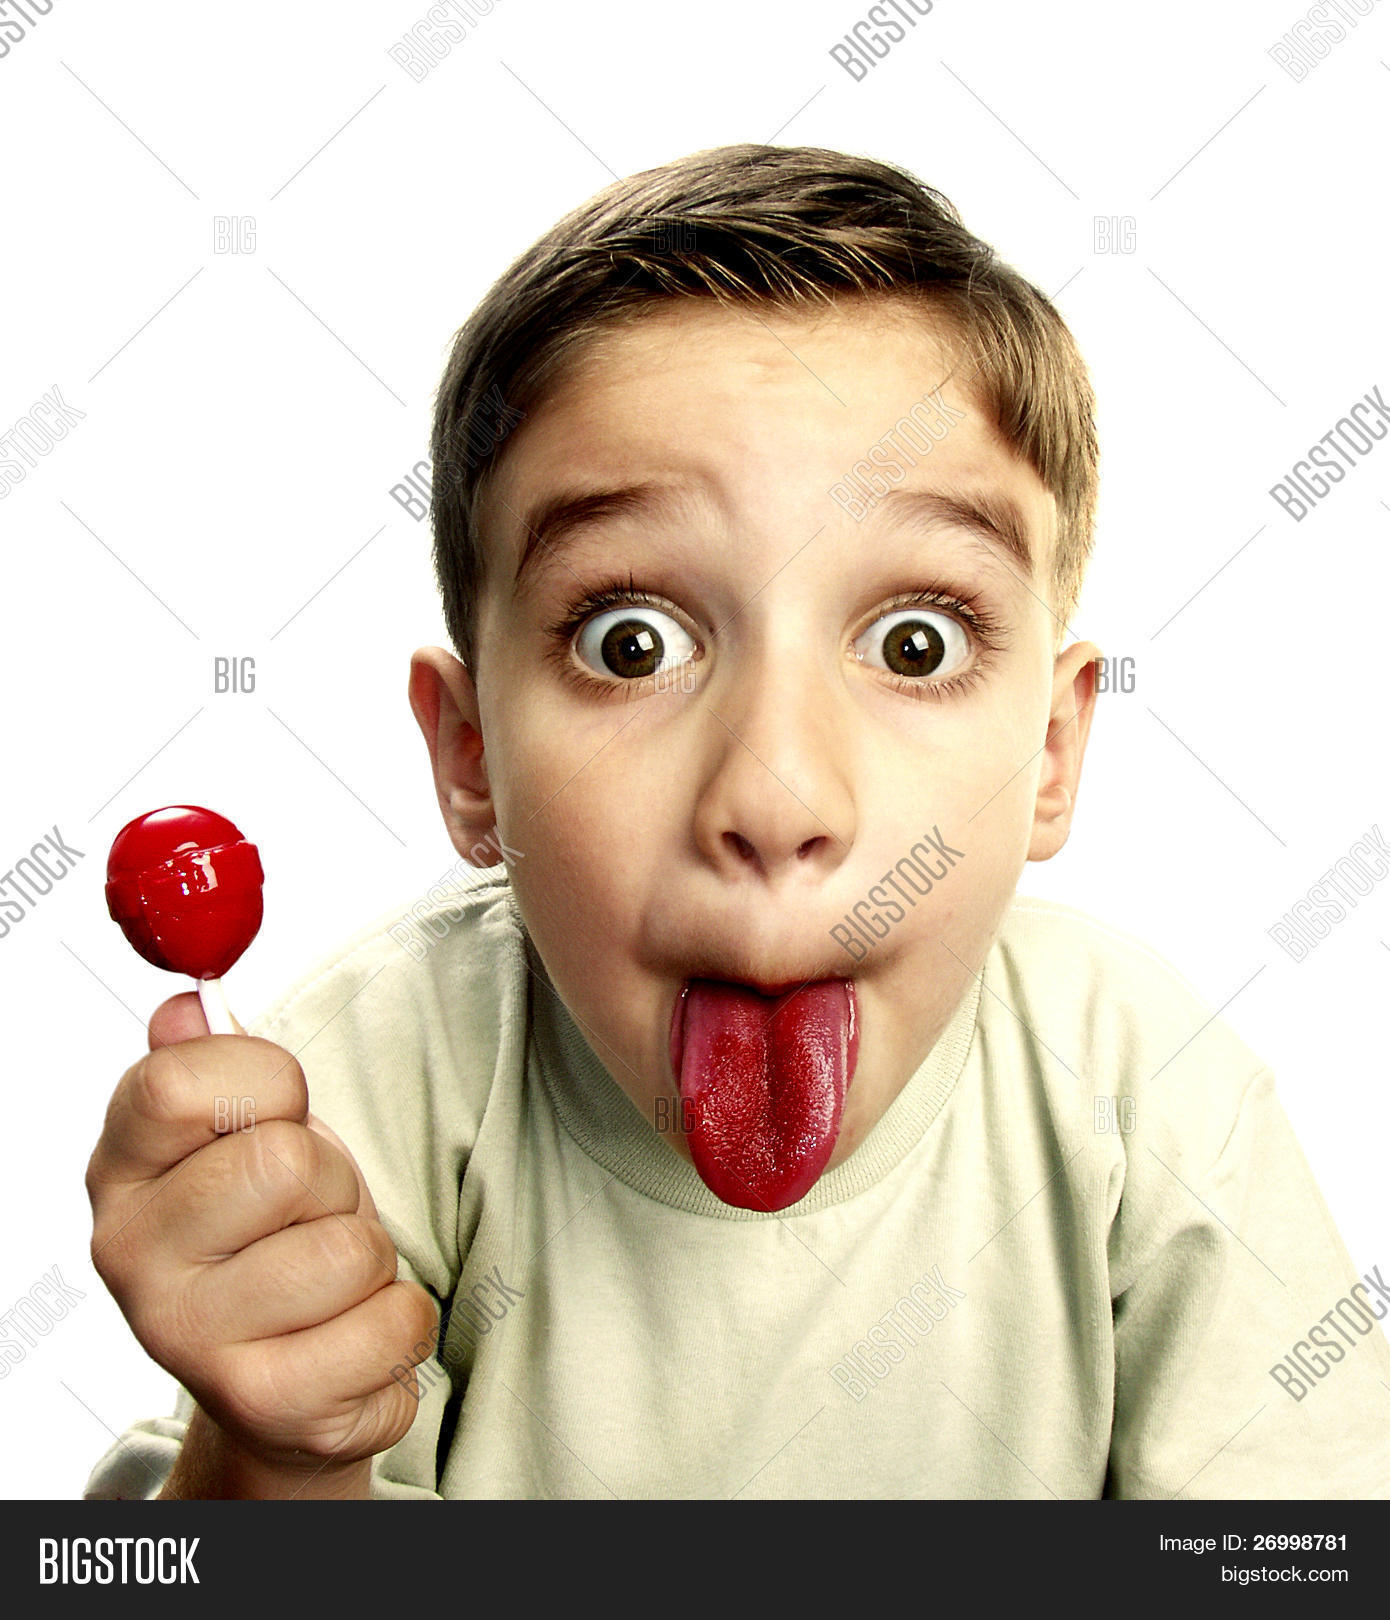 Boy eating lollipop photo